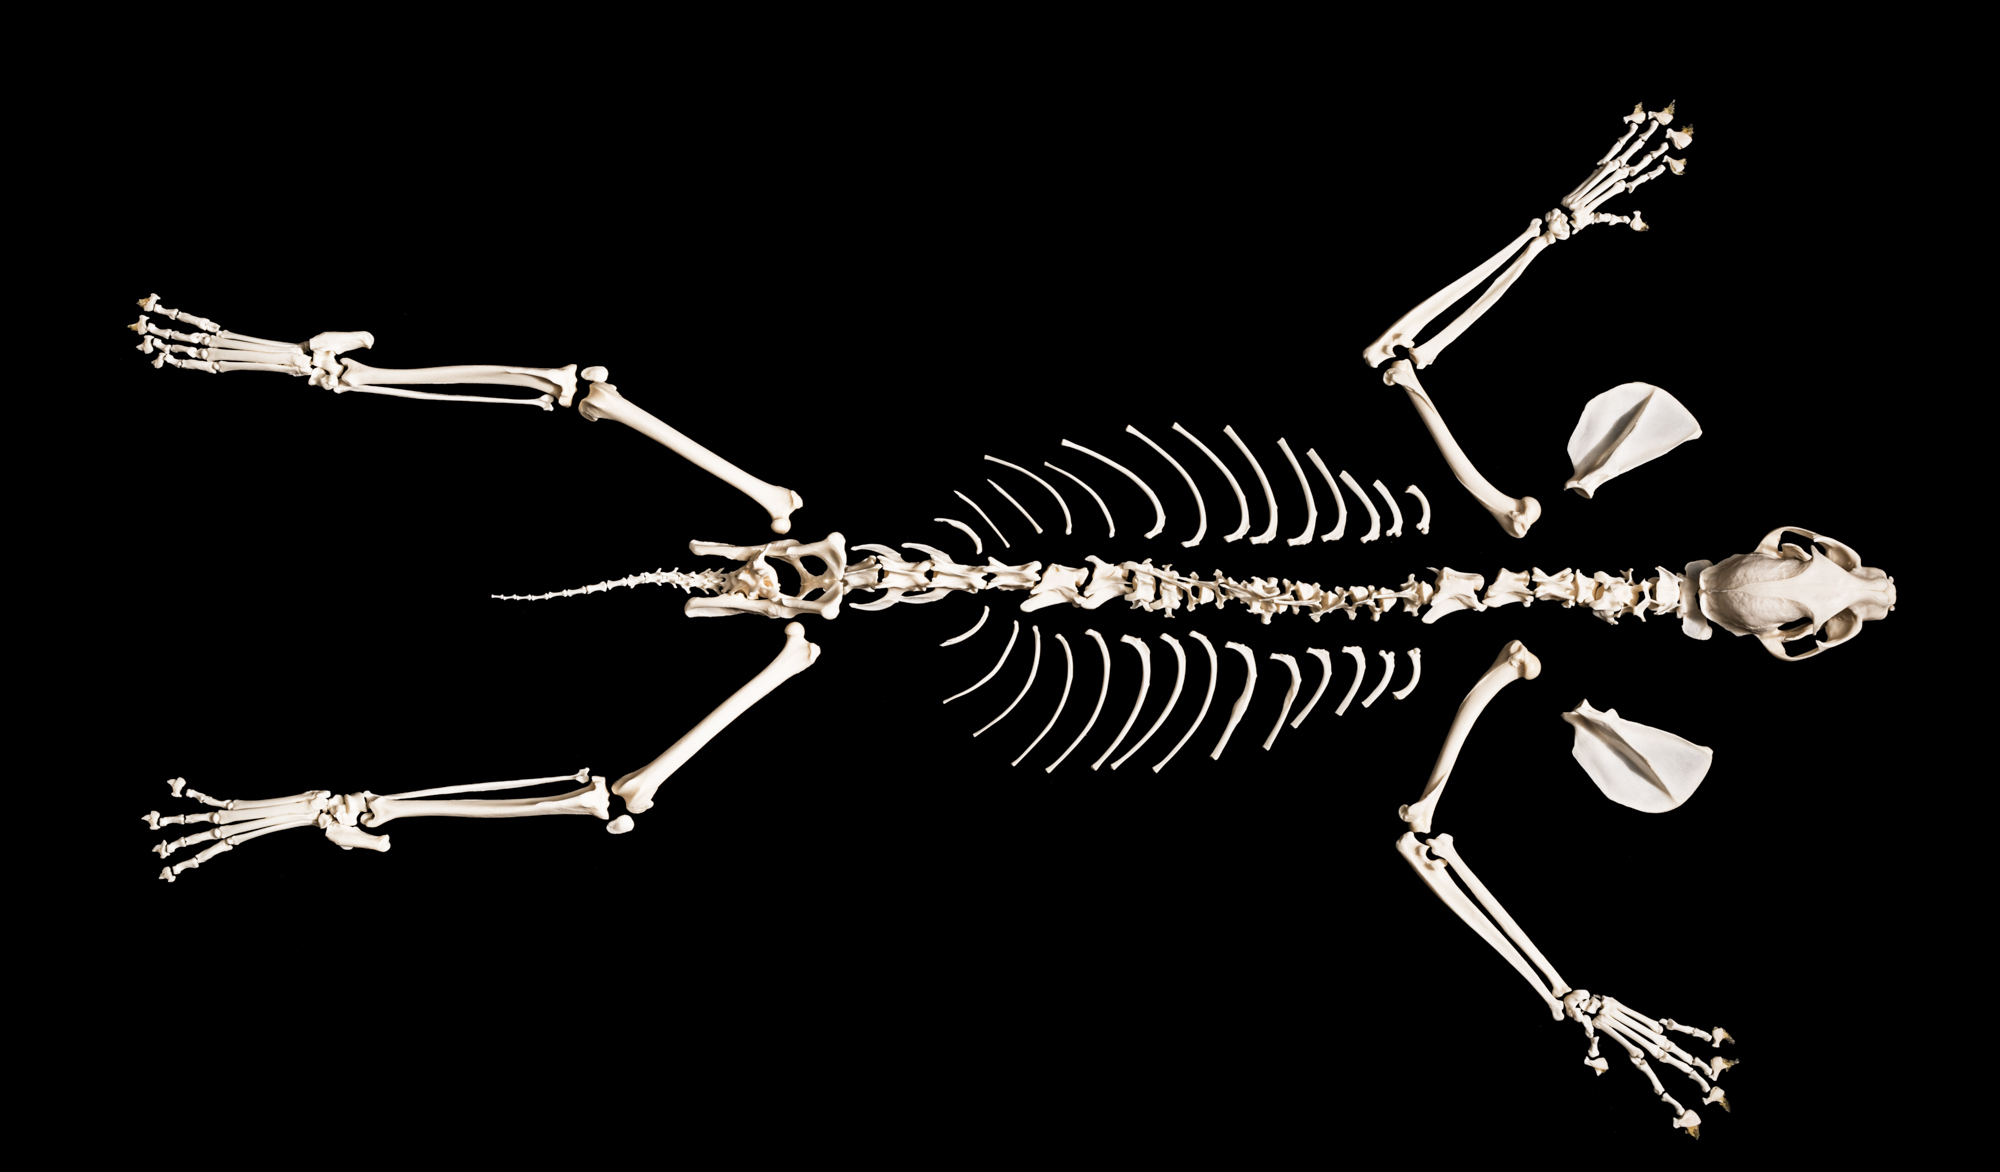 The anatomy of a bobcat skeleton.